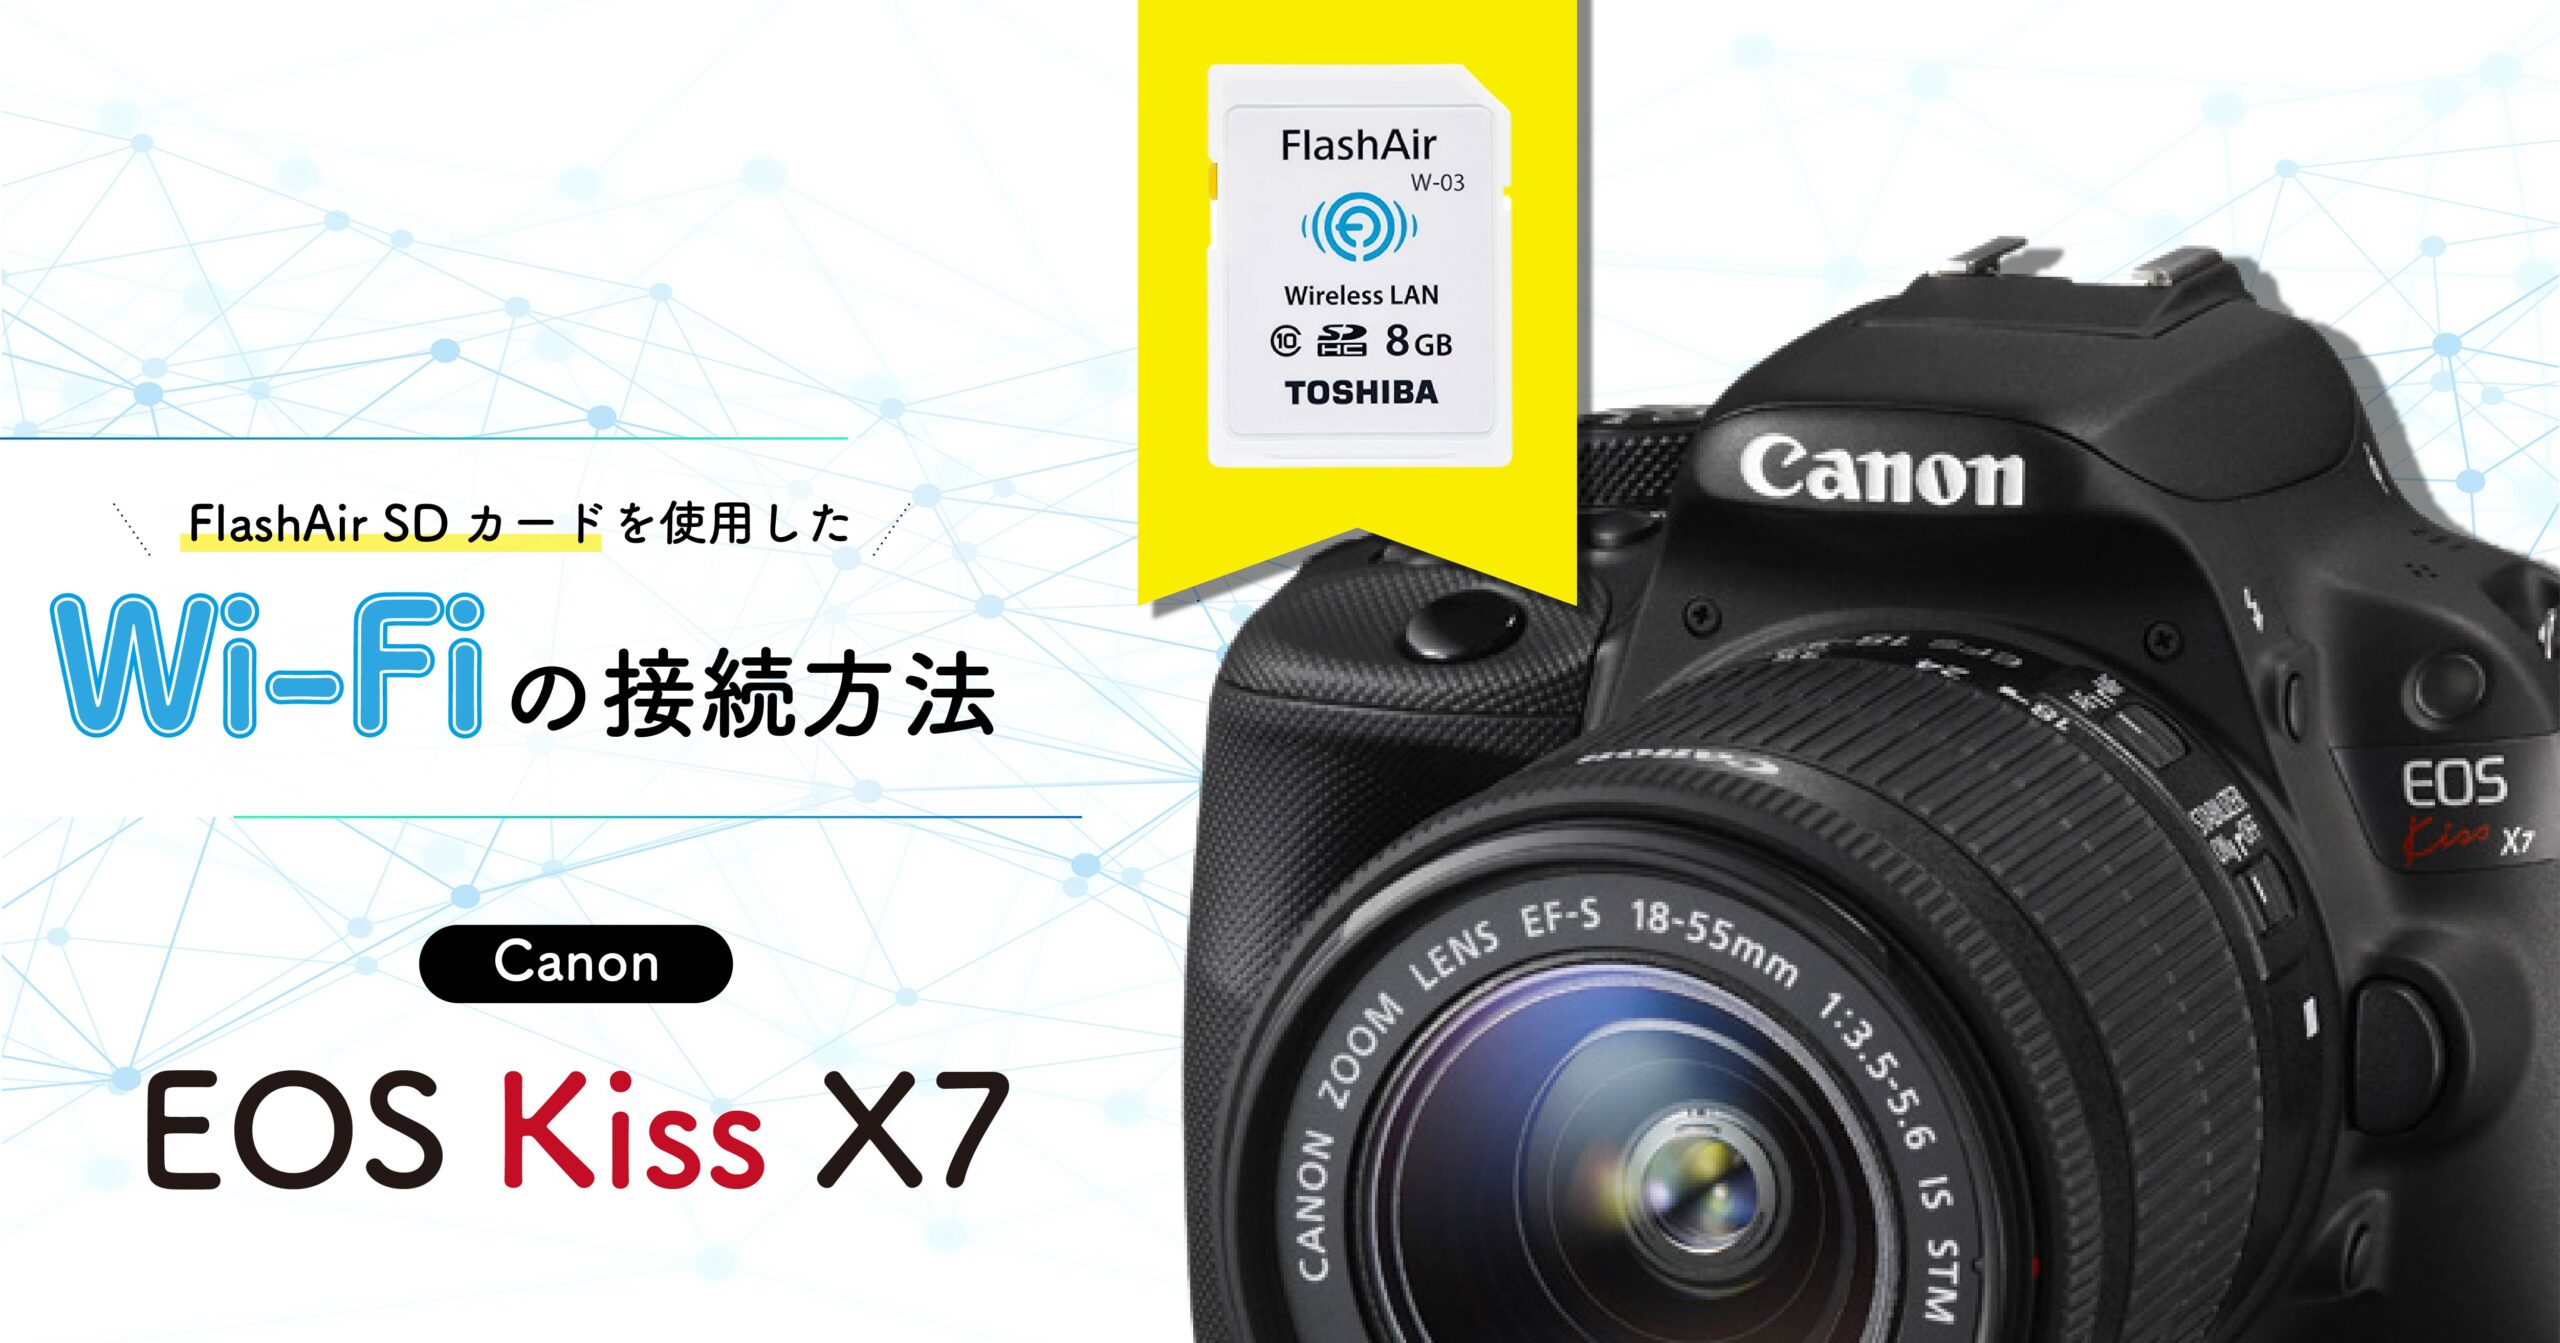 Canon EOS Kiss X7】FlashAir SDカードを使用したWi-Fiの接続方法 ...